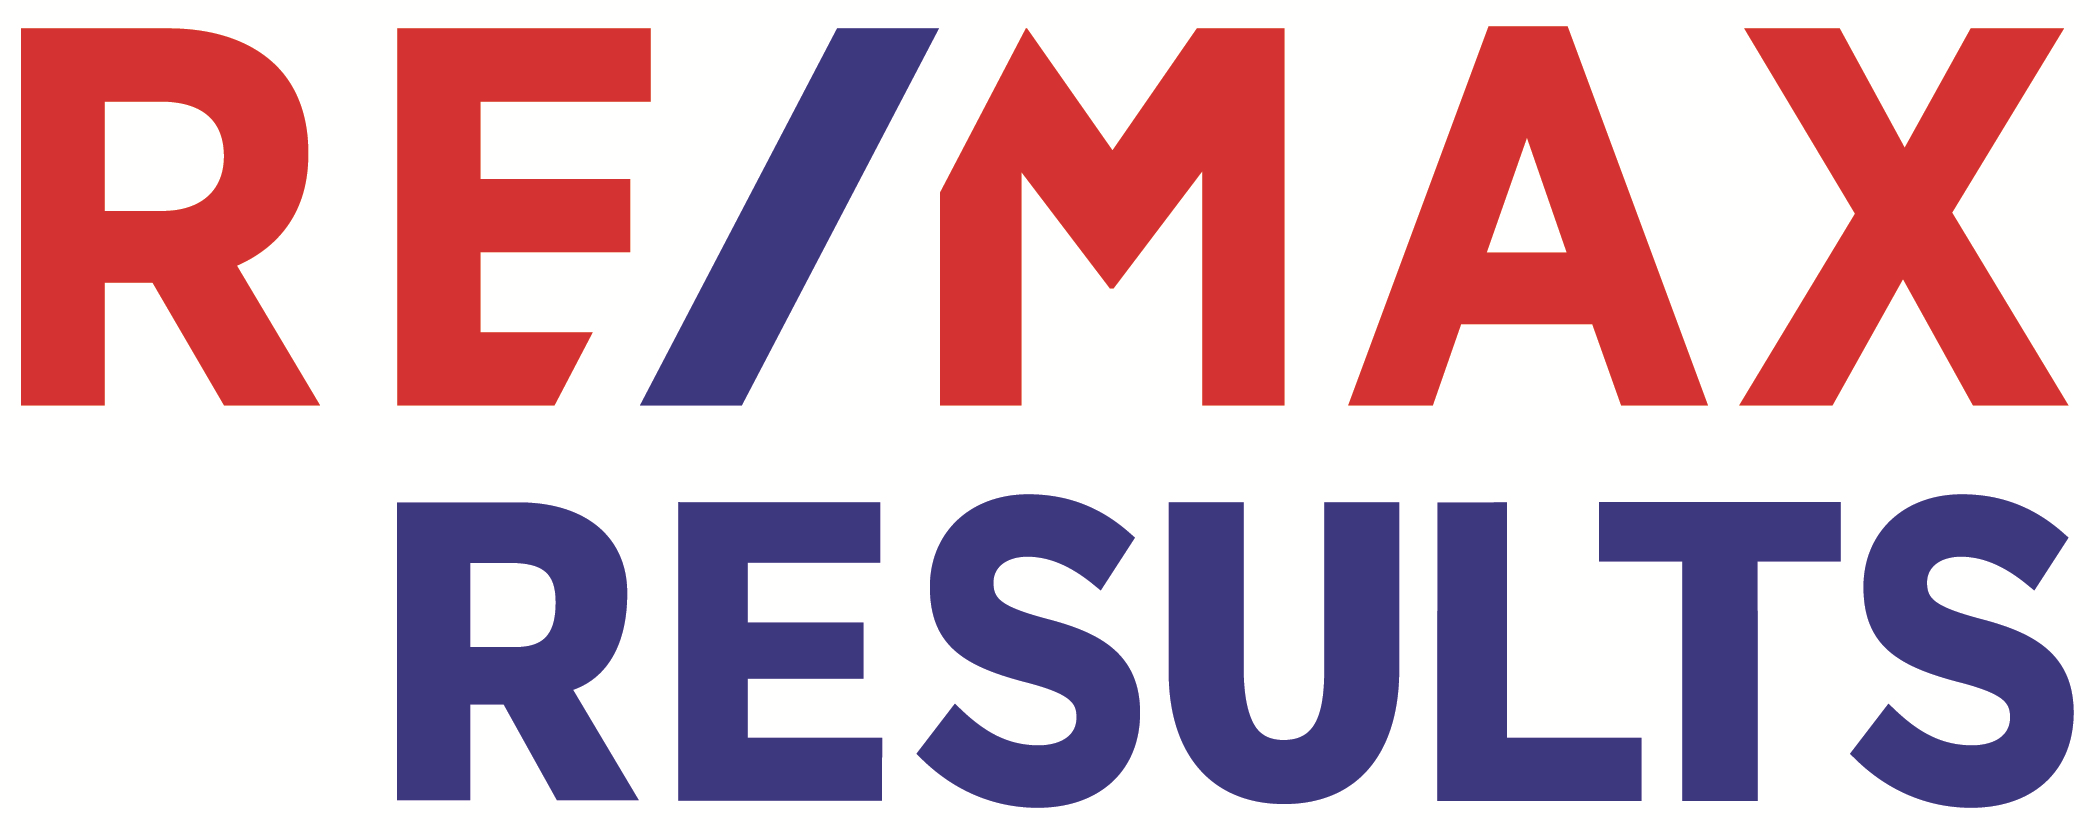 RE/MAX Results Company Logo